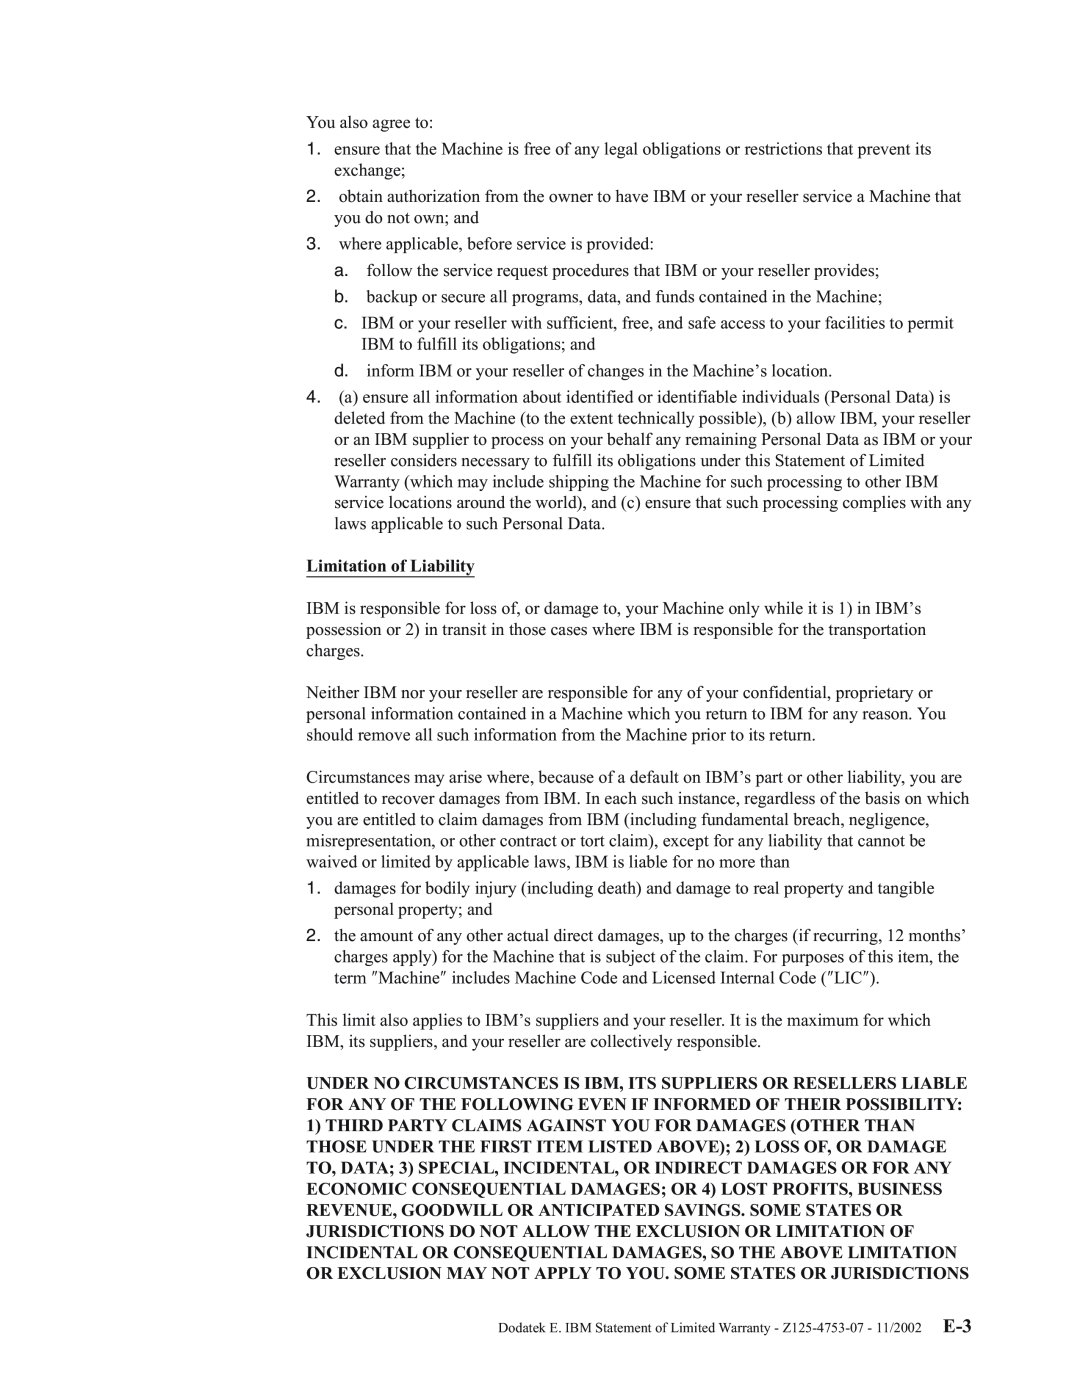 IBM E400 manual Limitation of Liability 